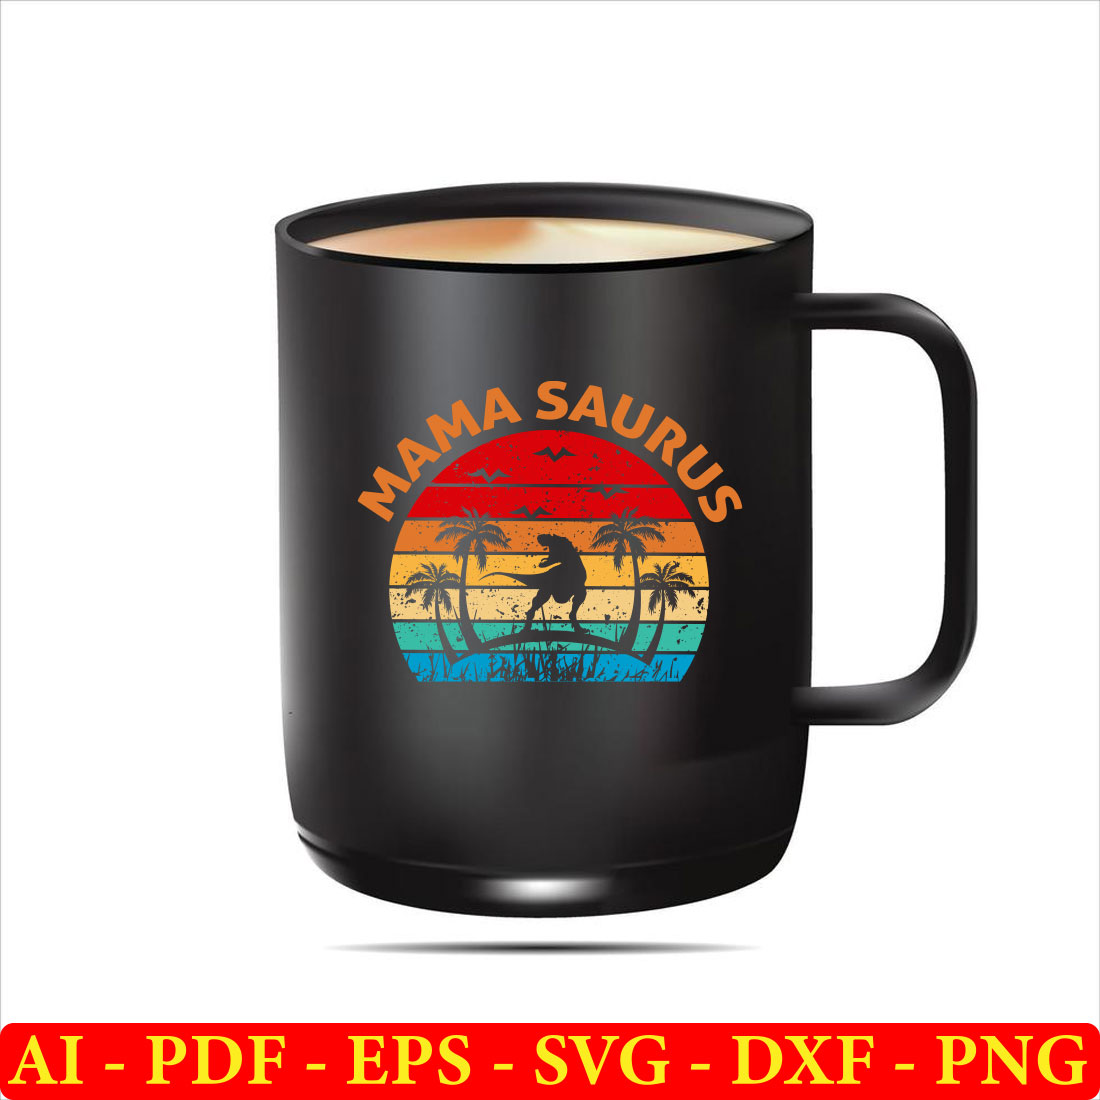 Black coffee mug with a sunset design on it.